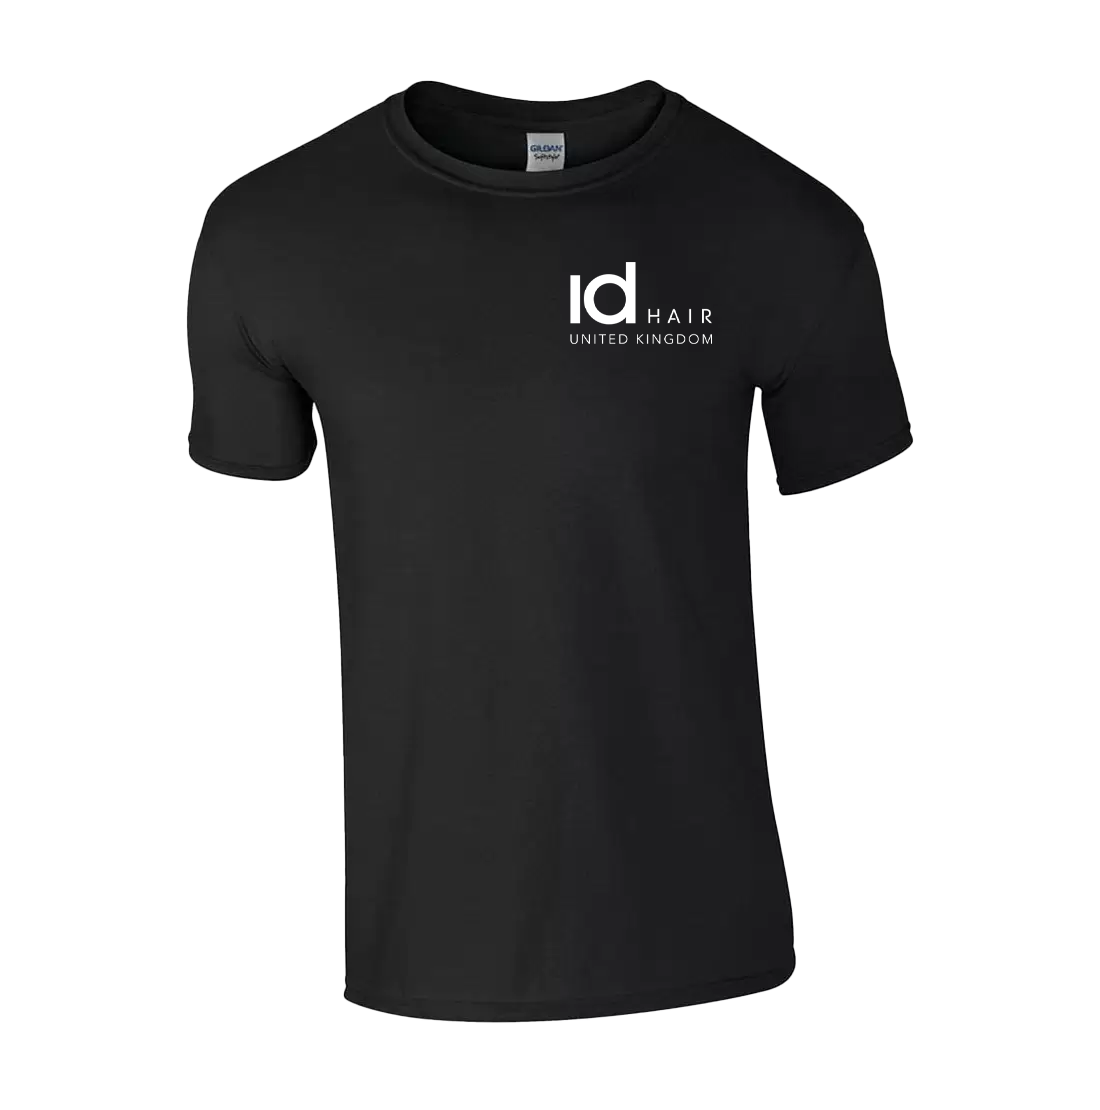 IdHAIR UK Official Black T.Shirt - Medium - Medium